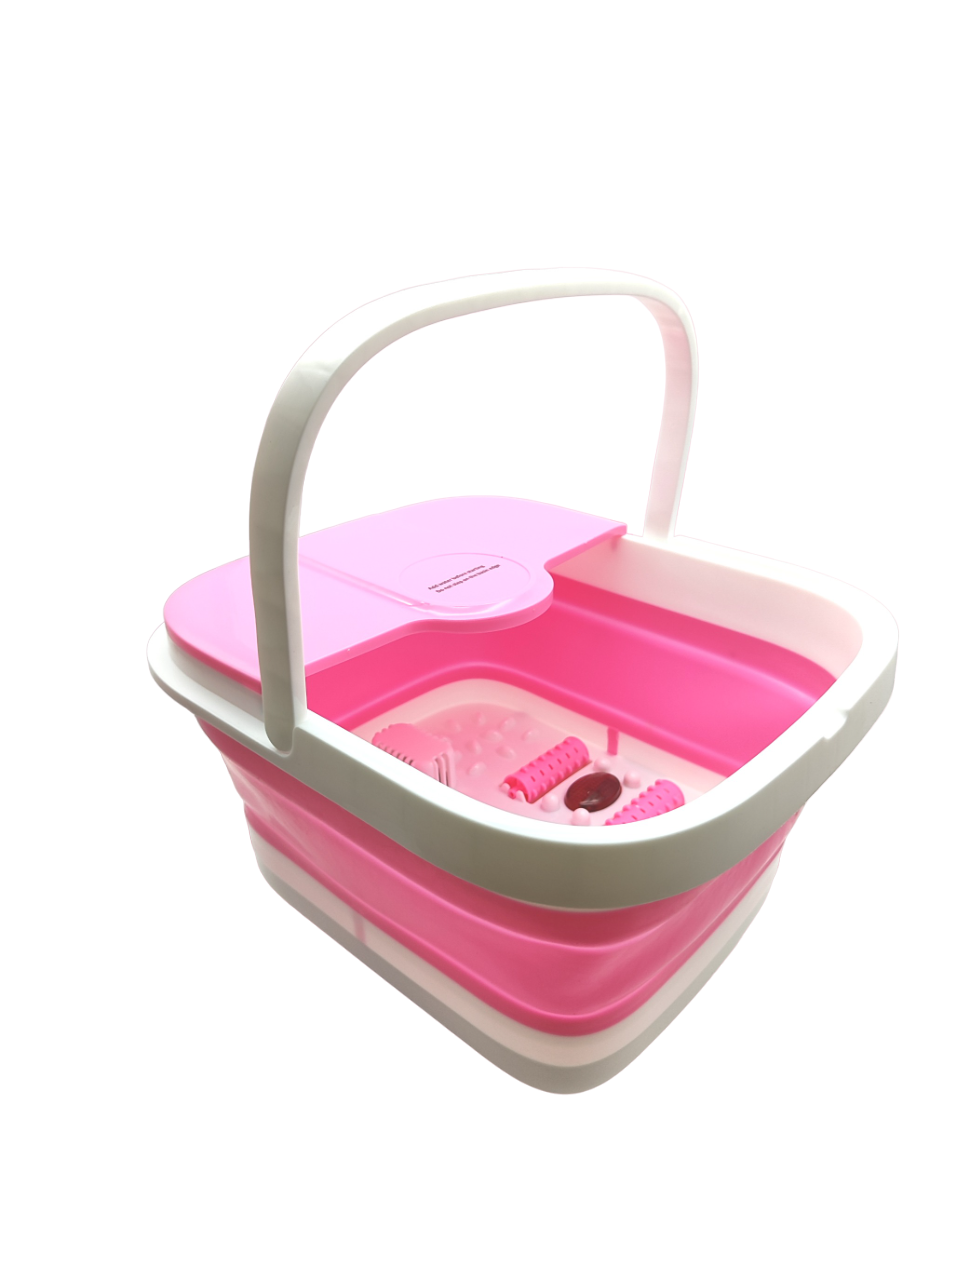 Массажная ванночка для ног MWN-368, 500W, гидромассажный массажер, розовый